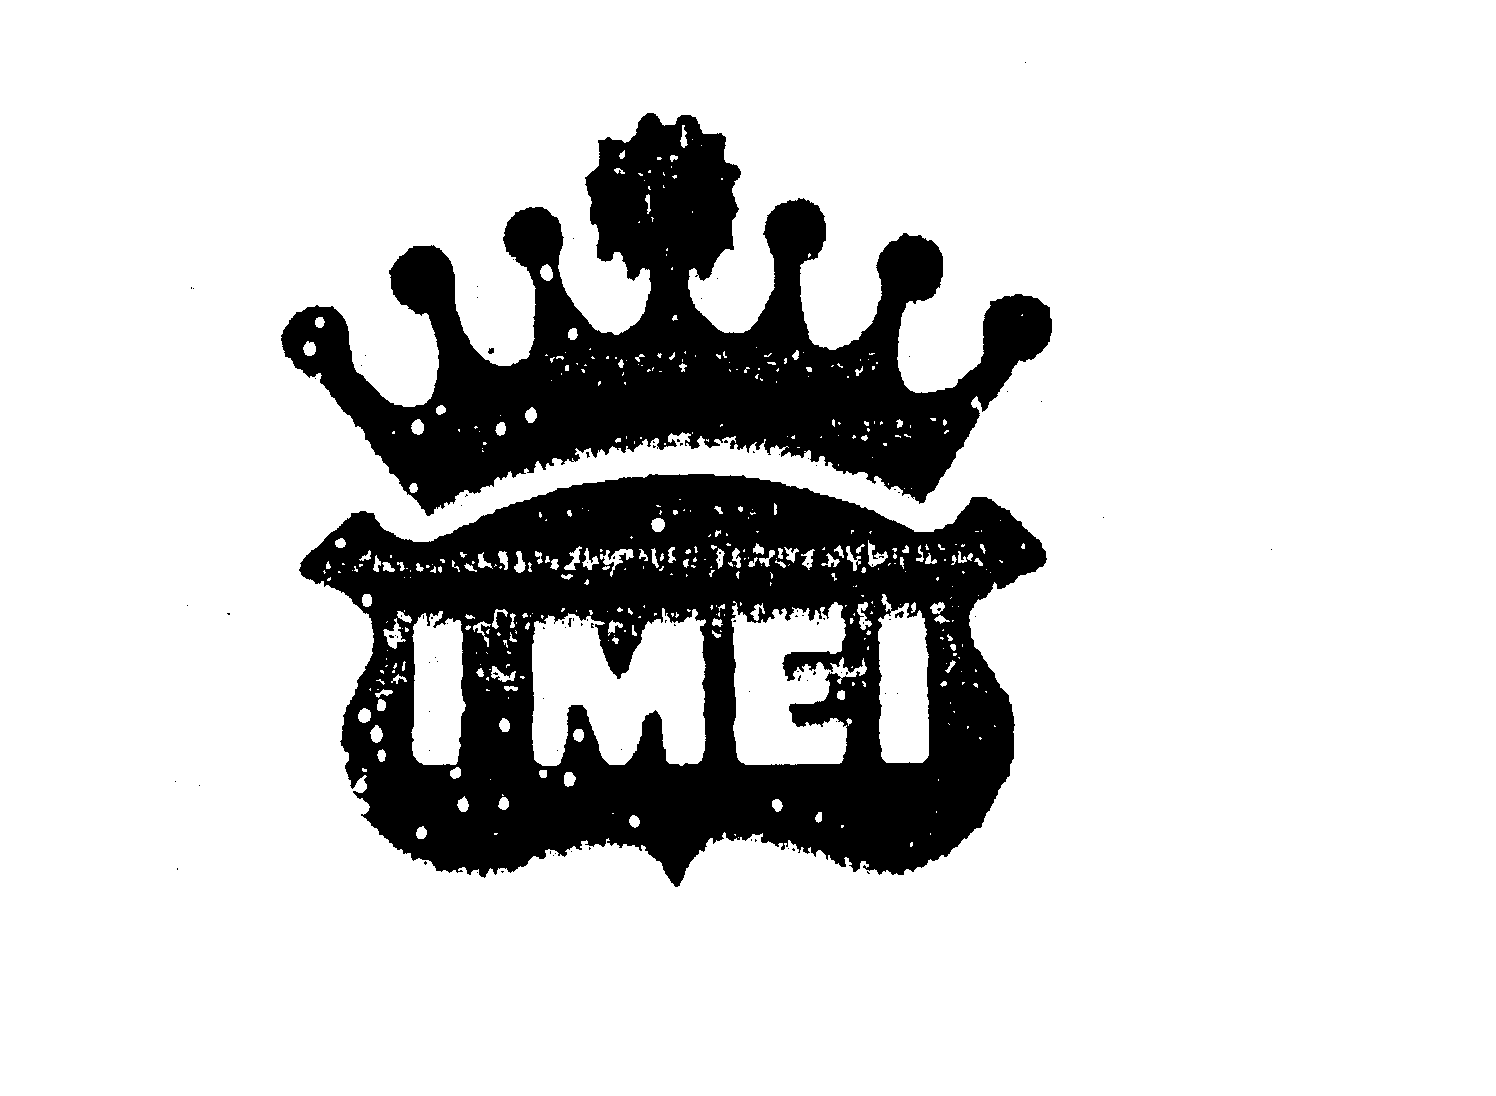 Trademark Logo IMEI